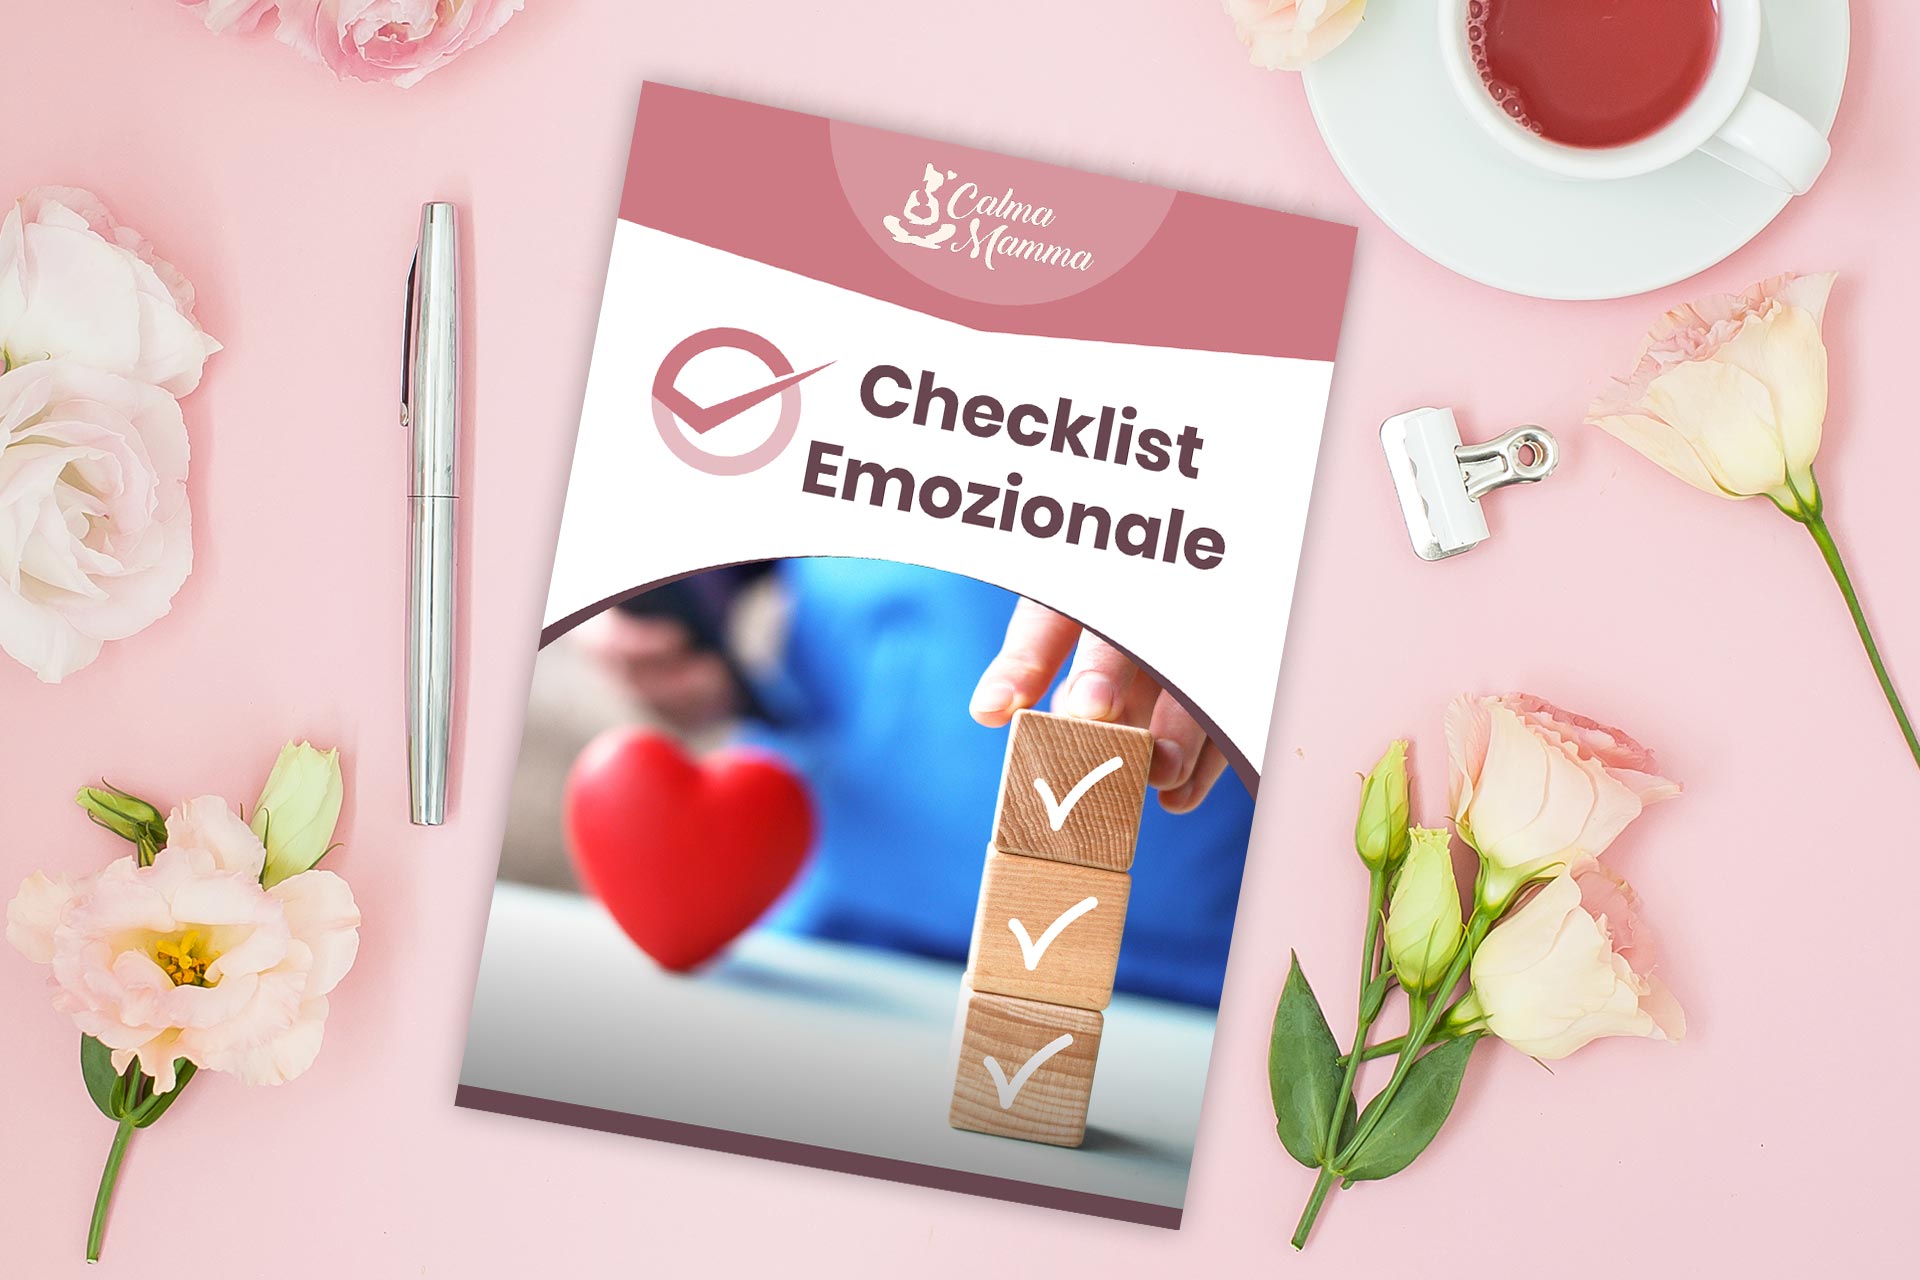 Checklist Emozionale